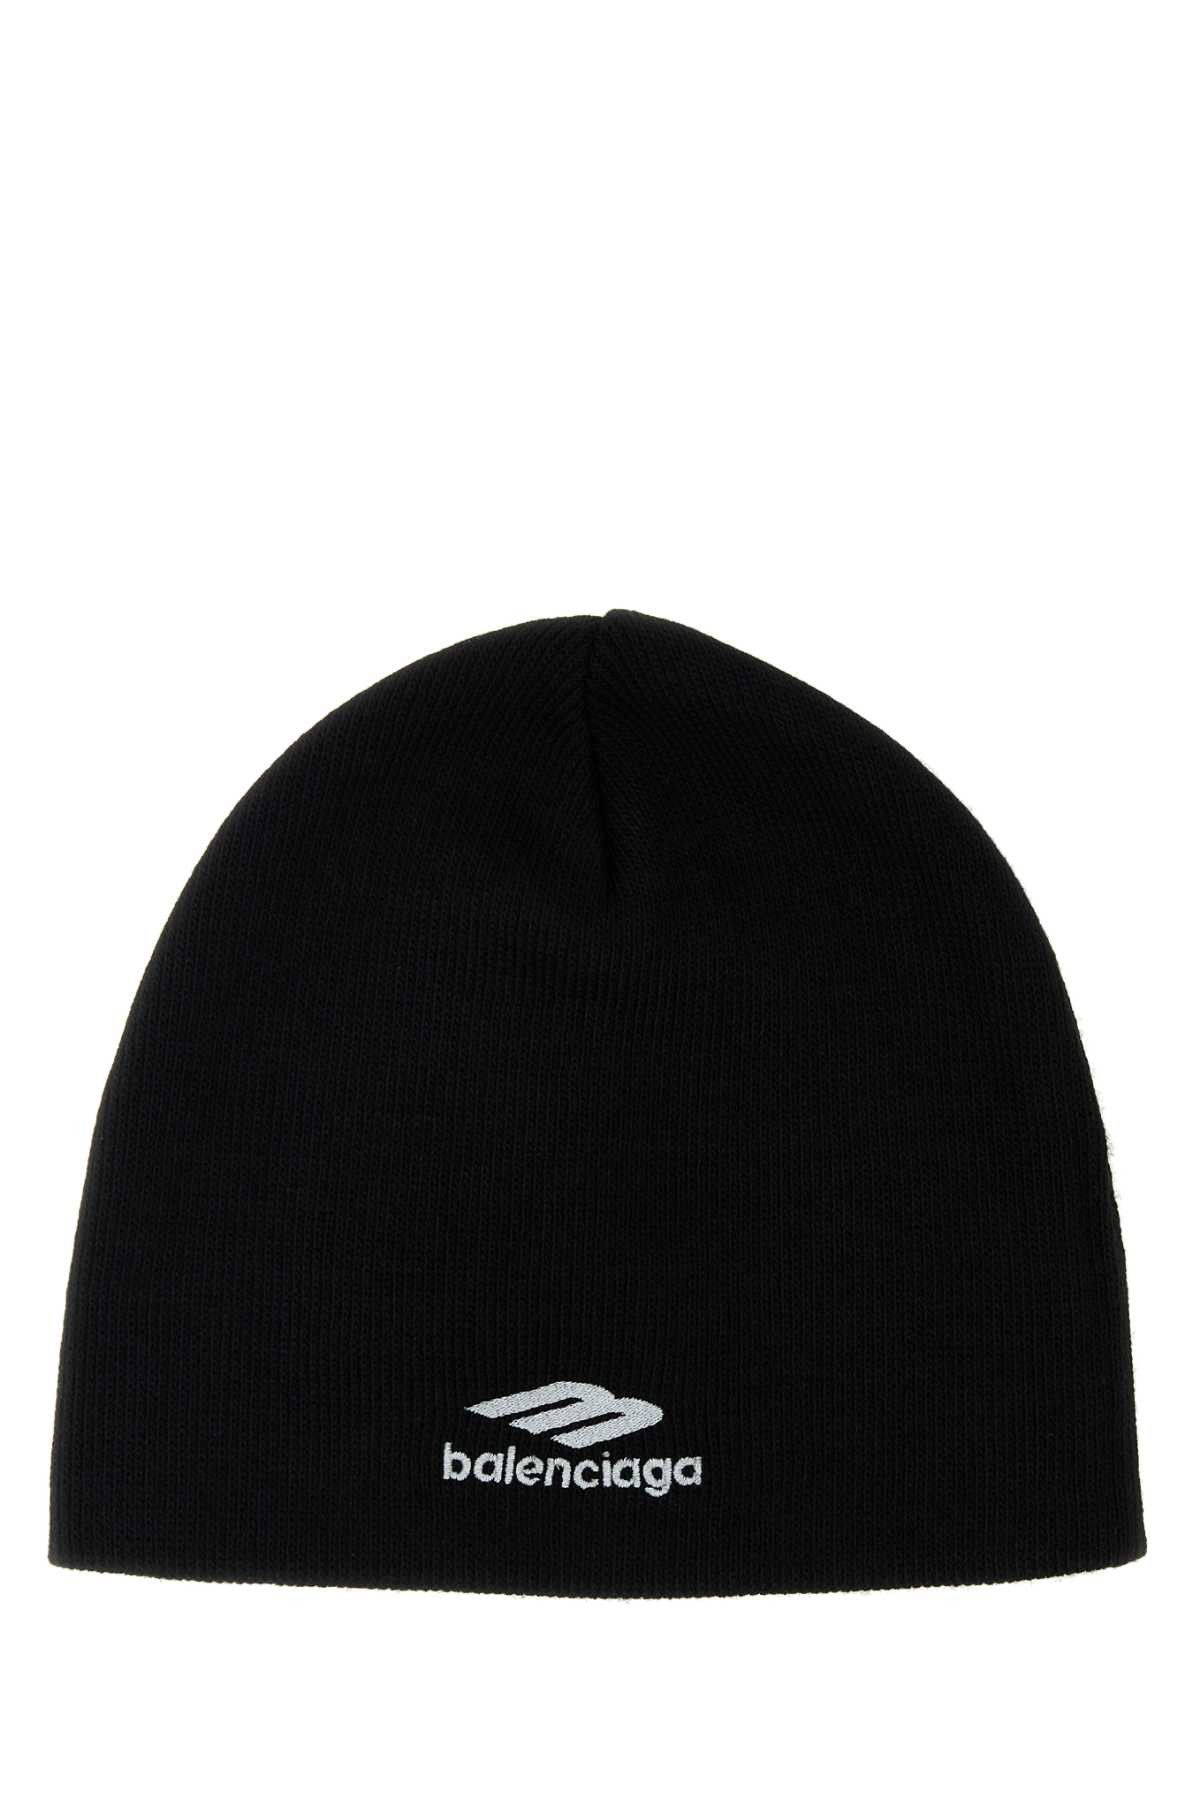 Pre-owned Balenciaga Black Acrylic 3b Beanie Hat